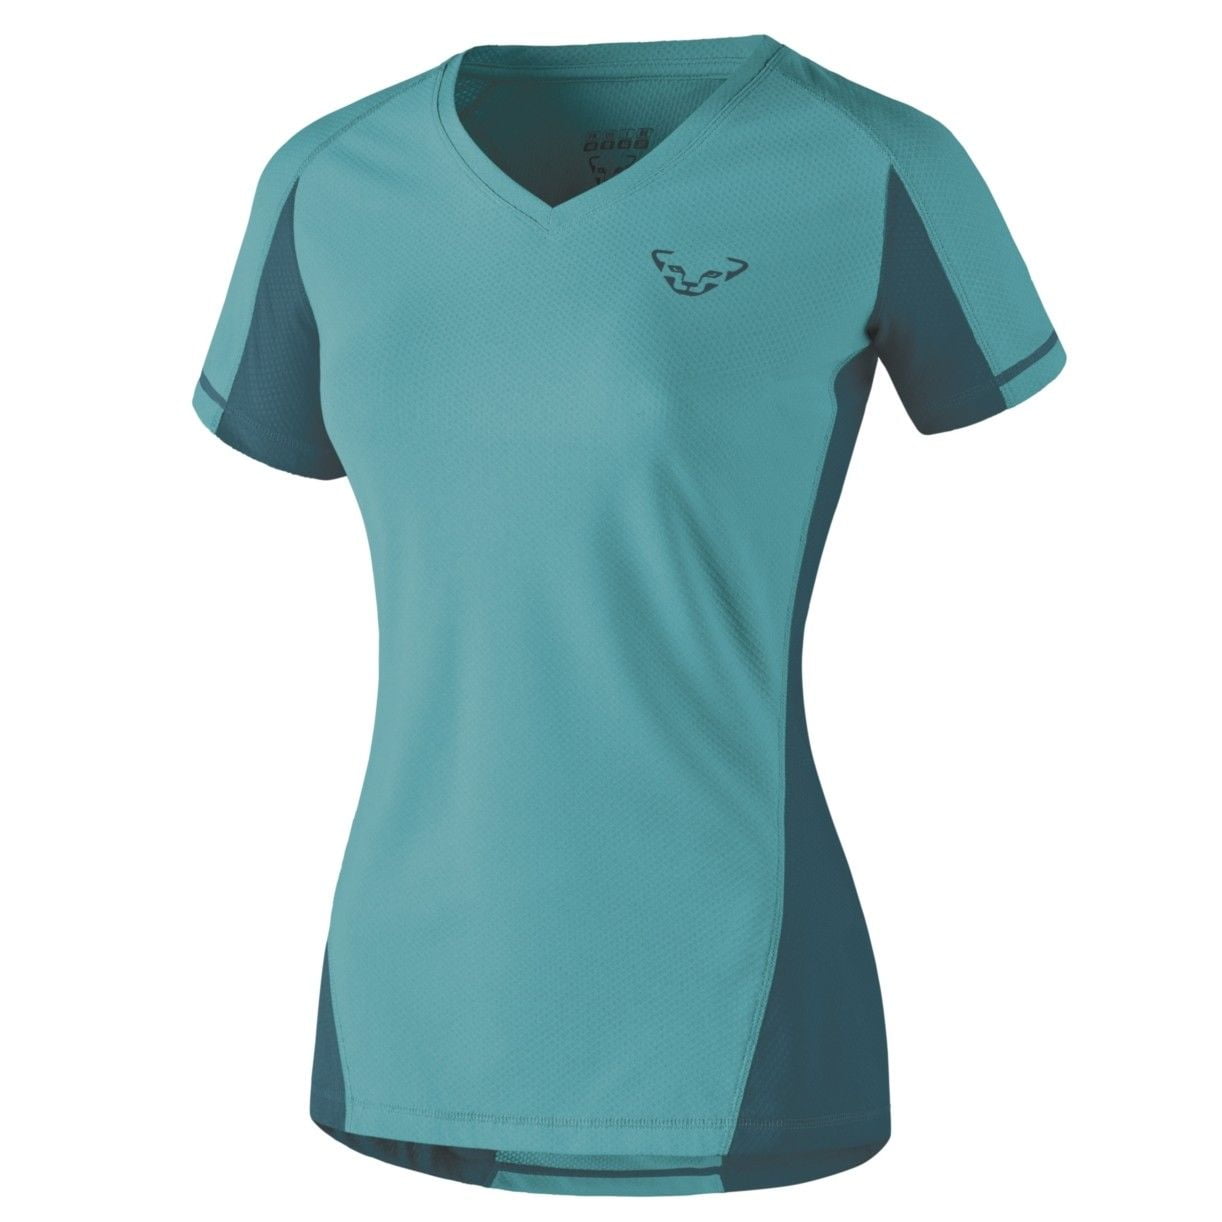 New DYNAFIT Enduro Violet Pour Femme Large S/S Tee Randonnée Running T Shirt PDSF $65